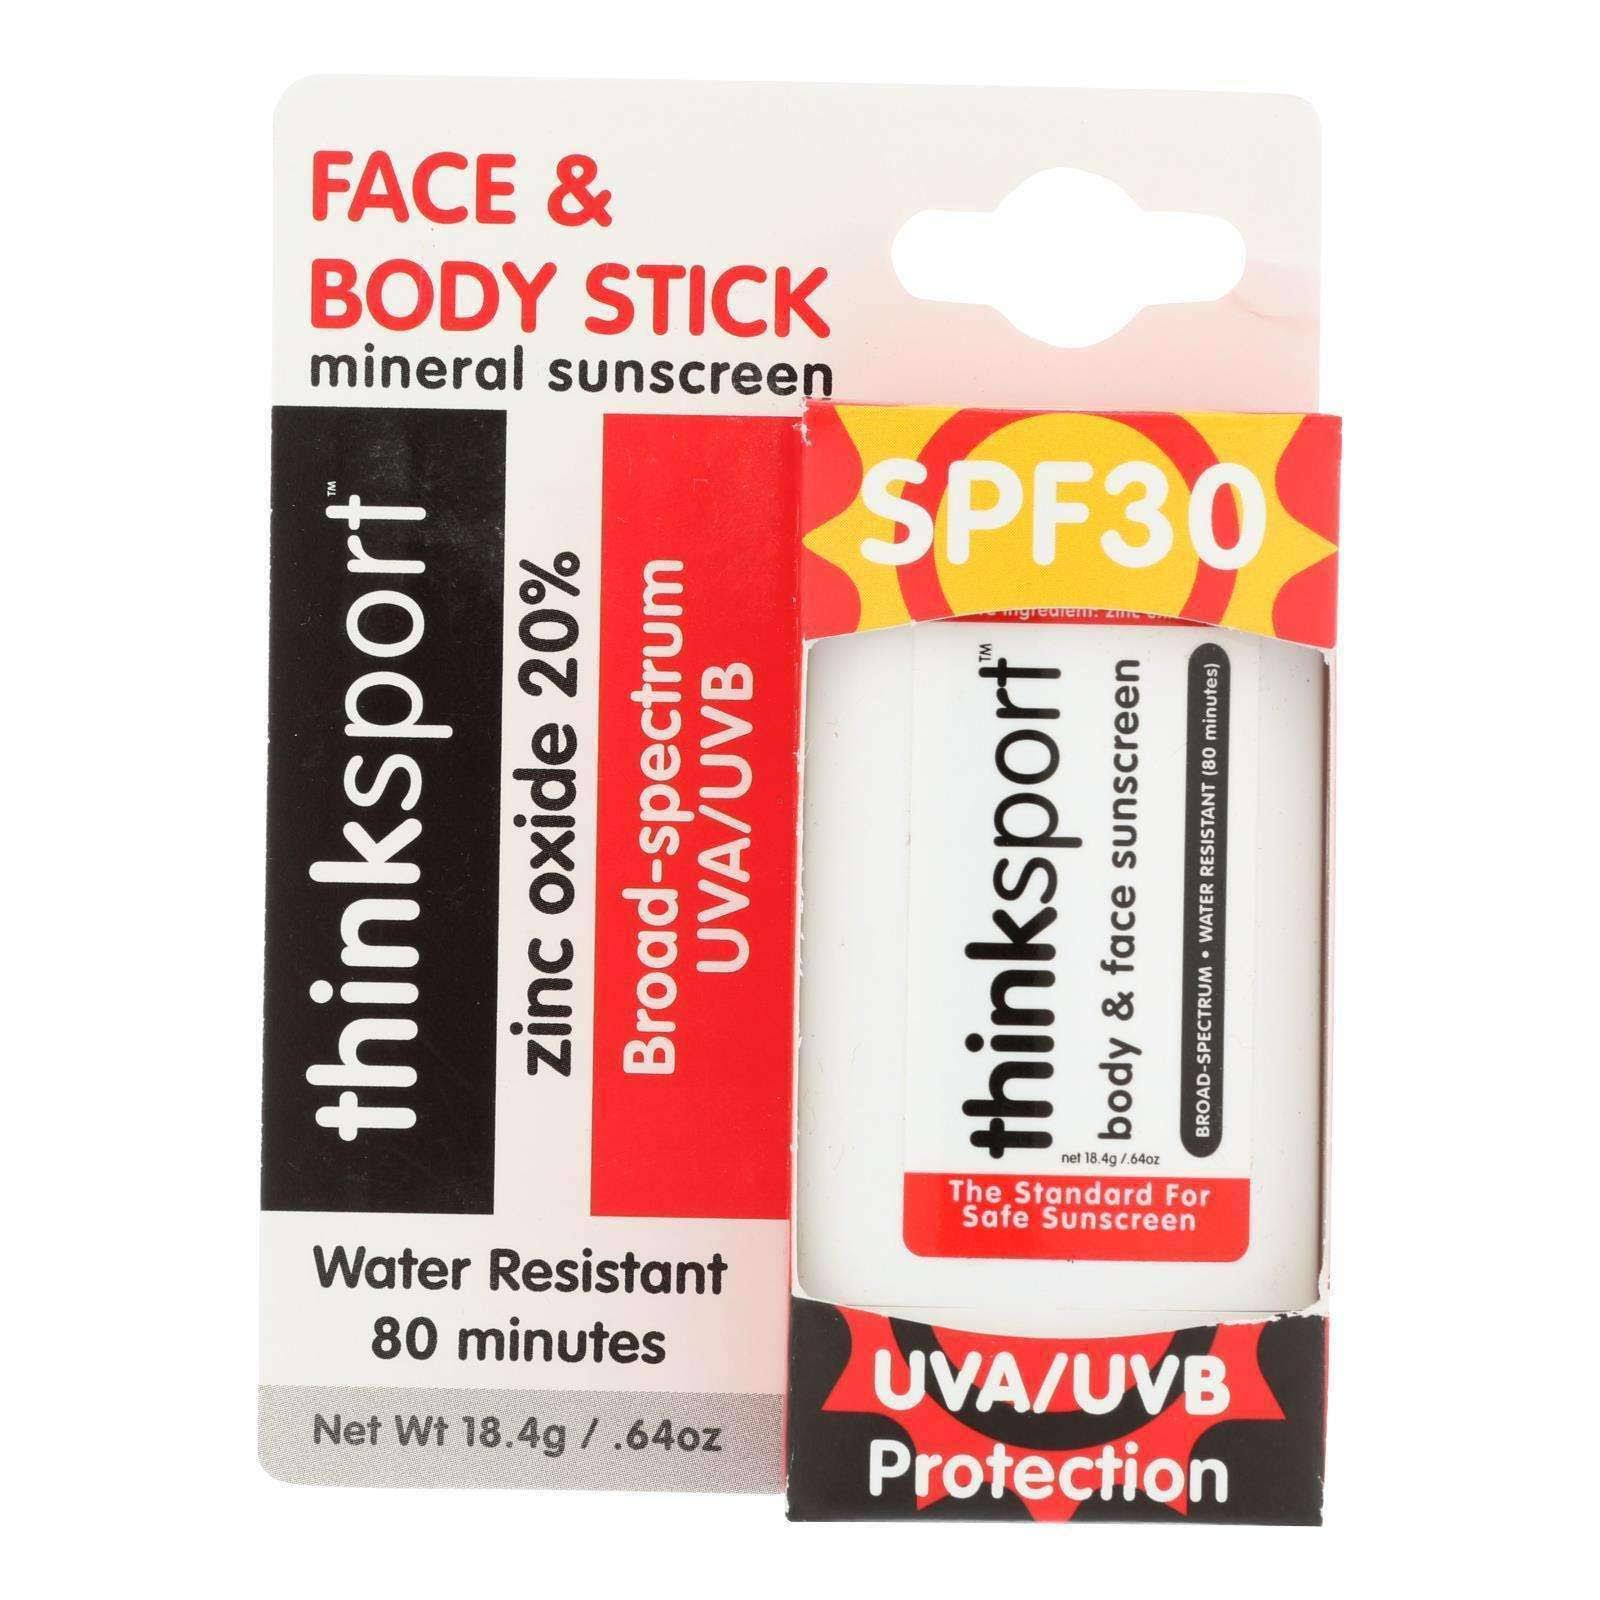 Thinksport Face and Body Stick - SPF 30, 0.64oz